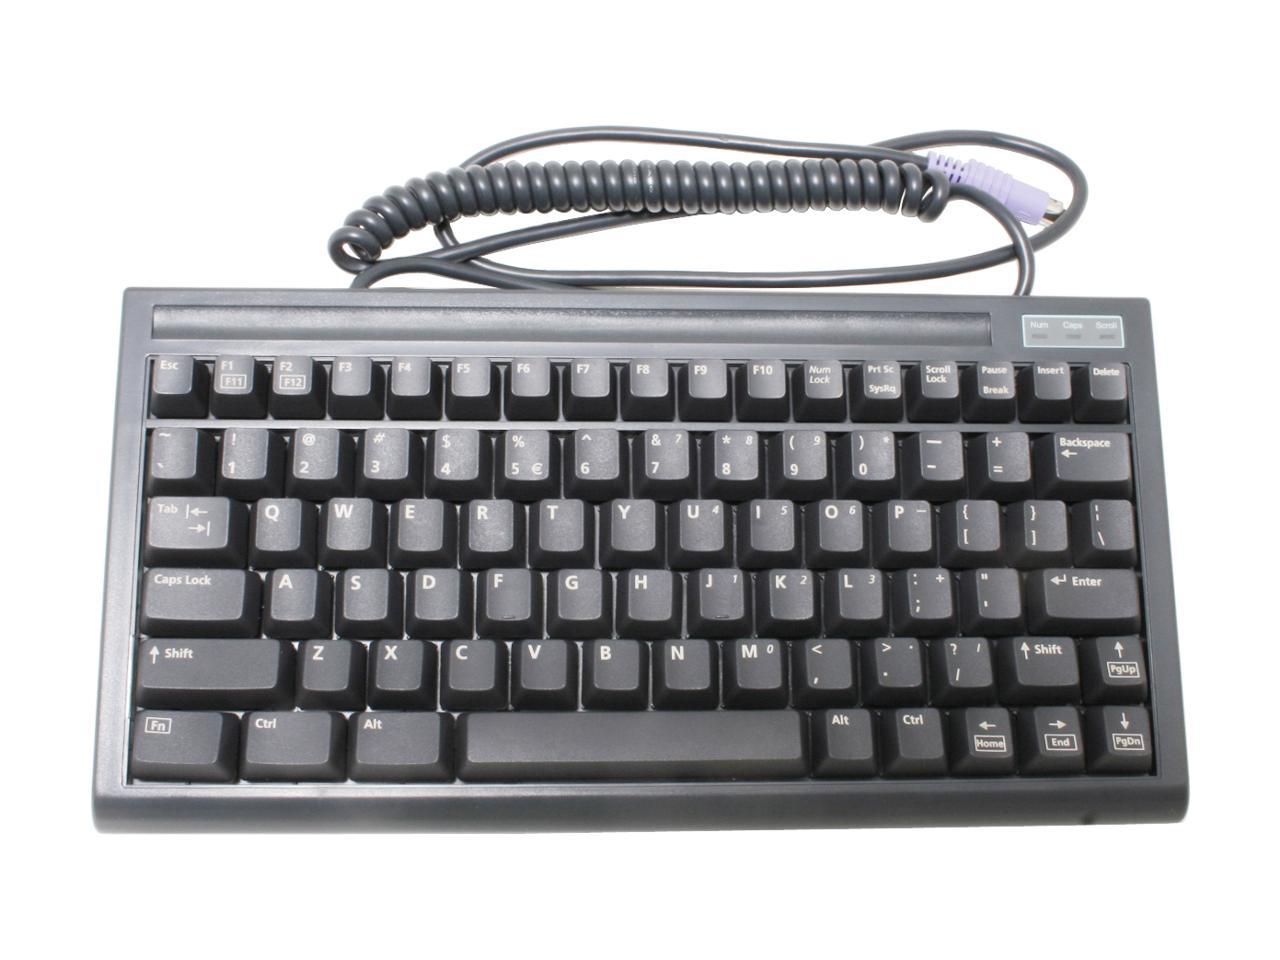 btc model 6100 keyboard